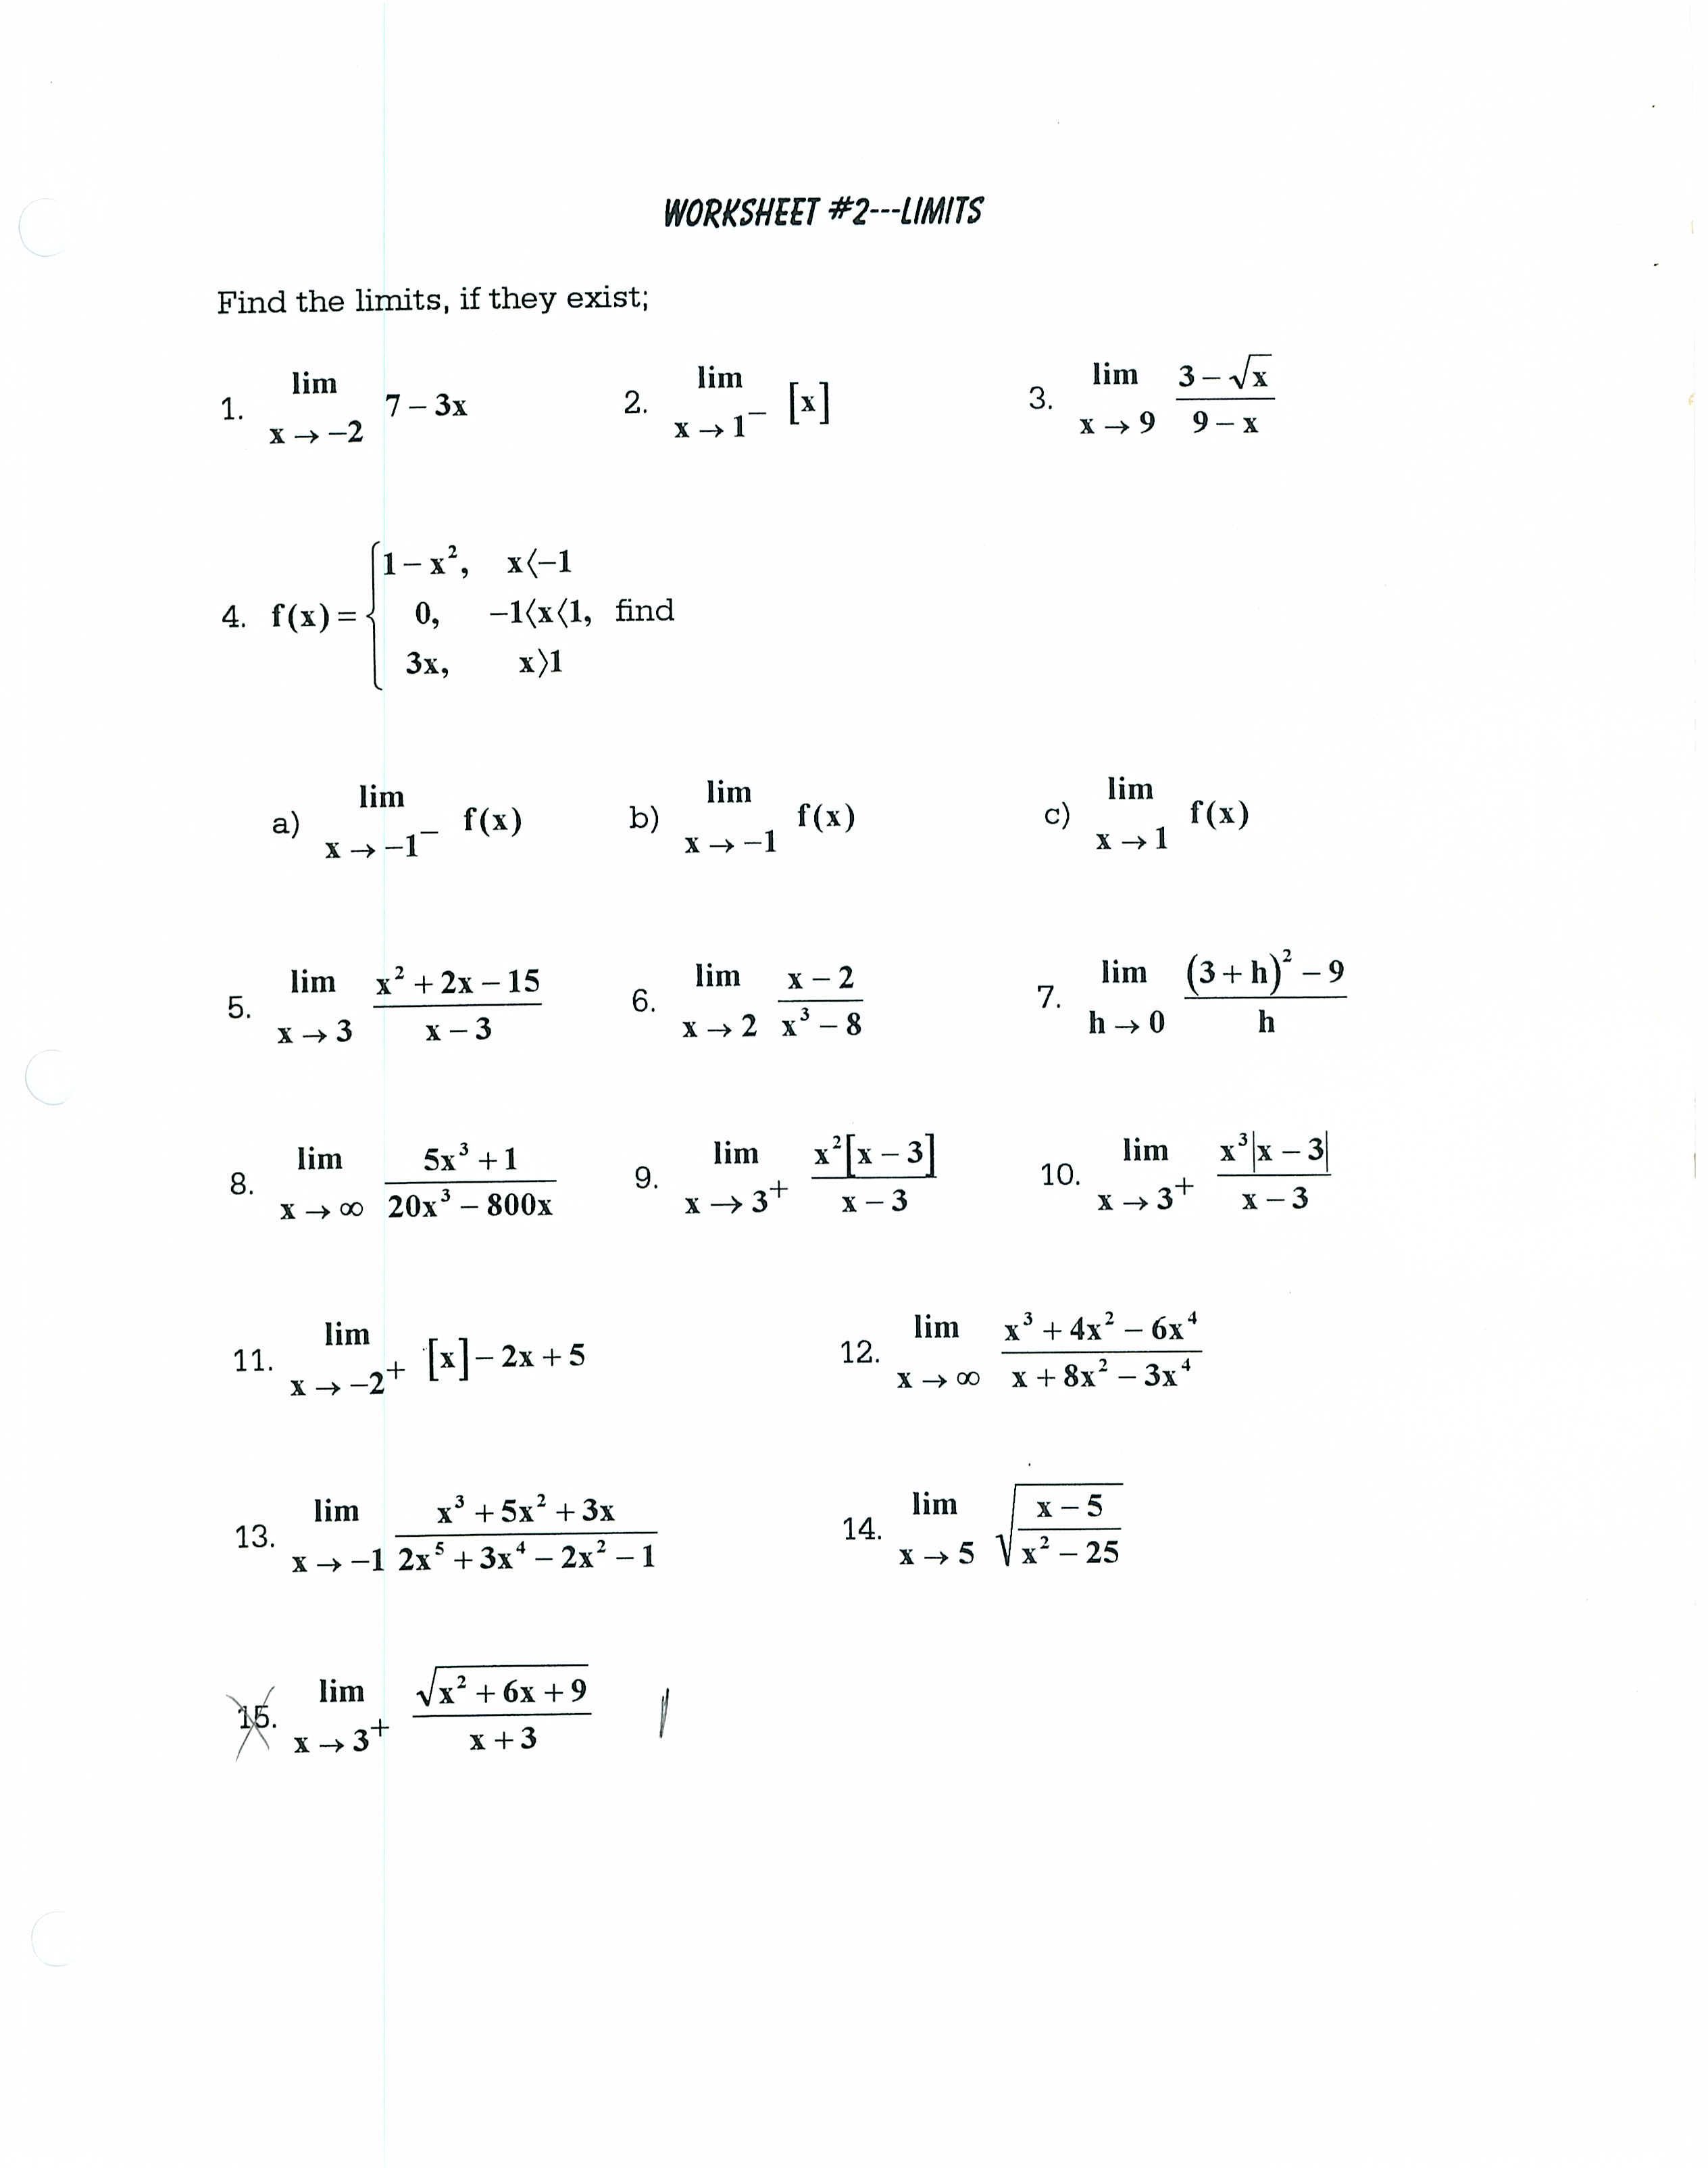 ap calculus derivative multiple choice questions ab